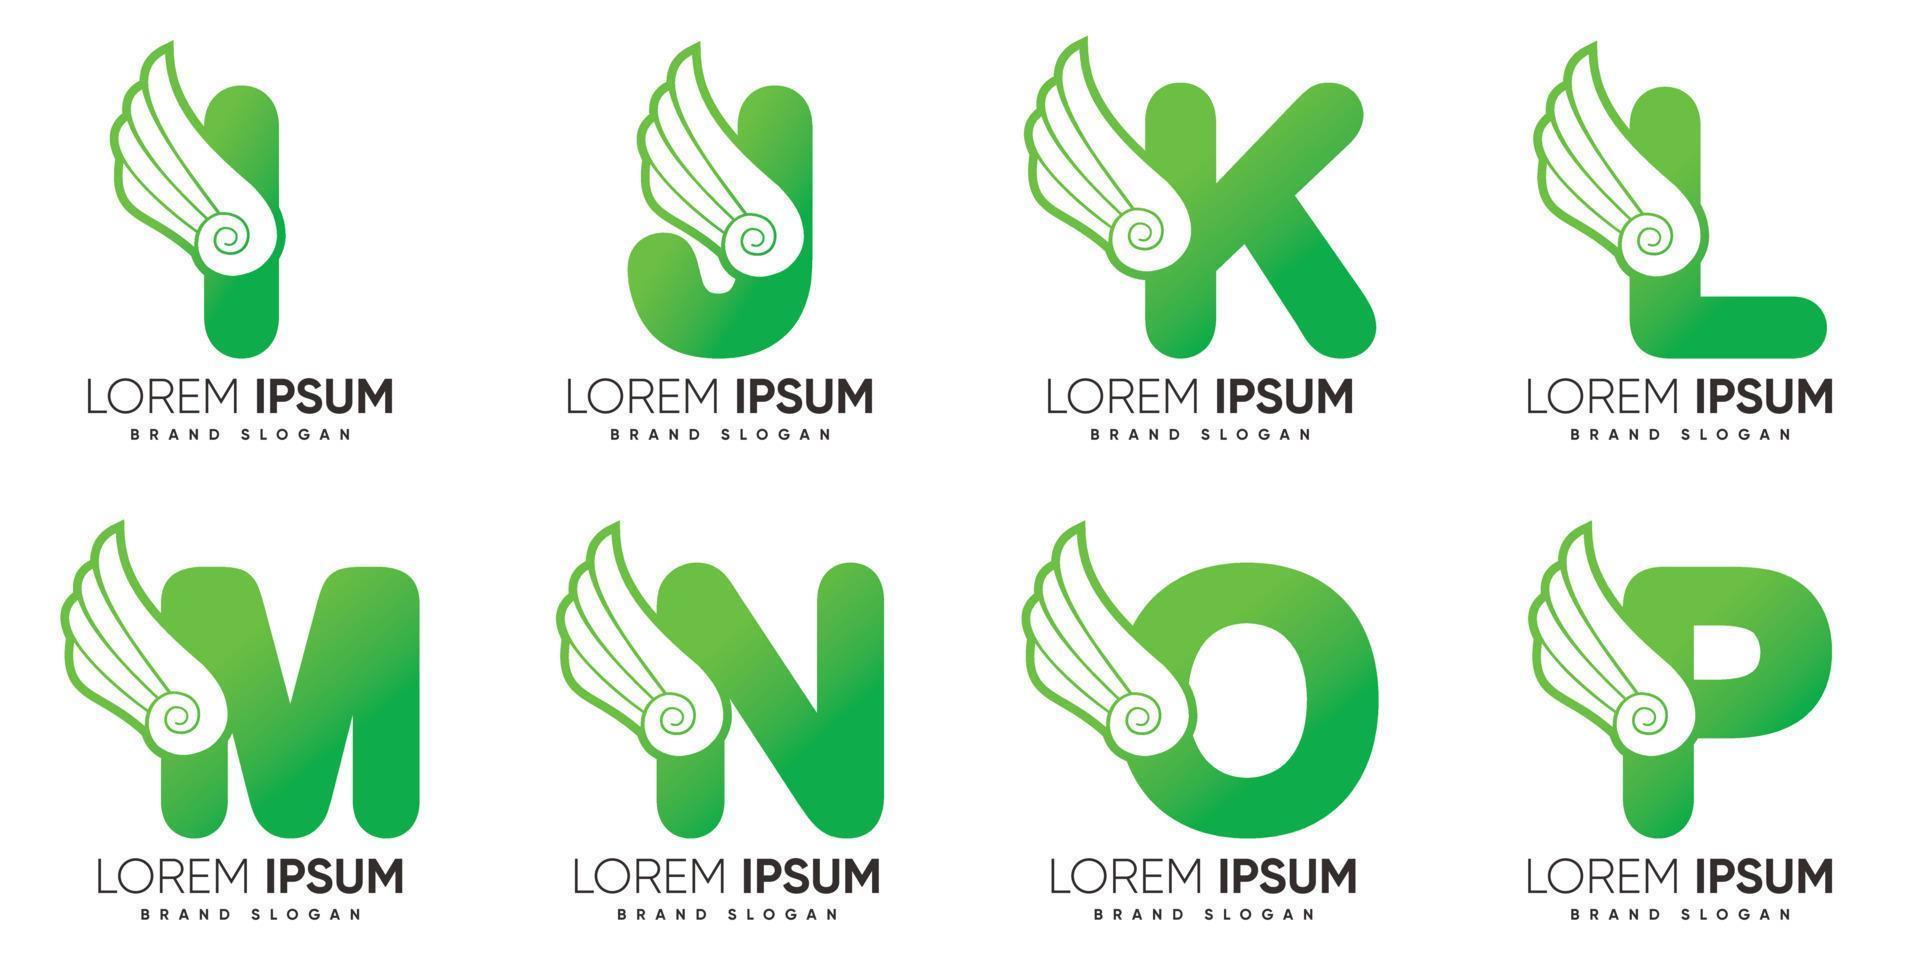 logotipo de letra ijklmnop con vector premium de estilo moderno creativo